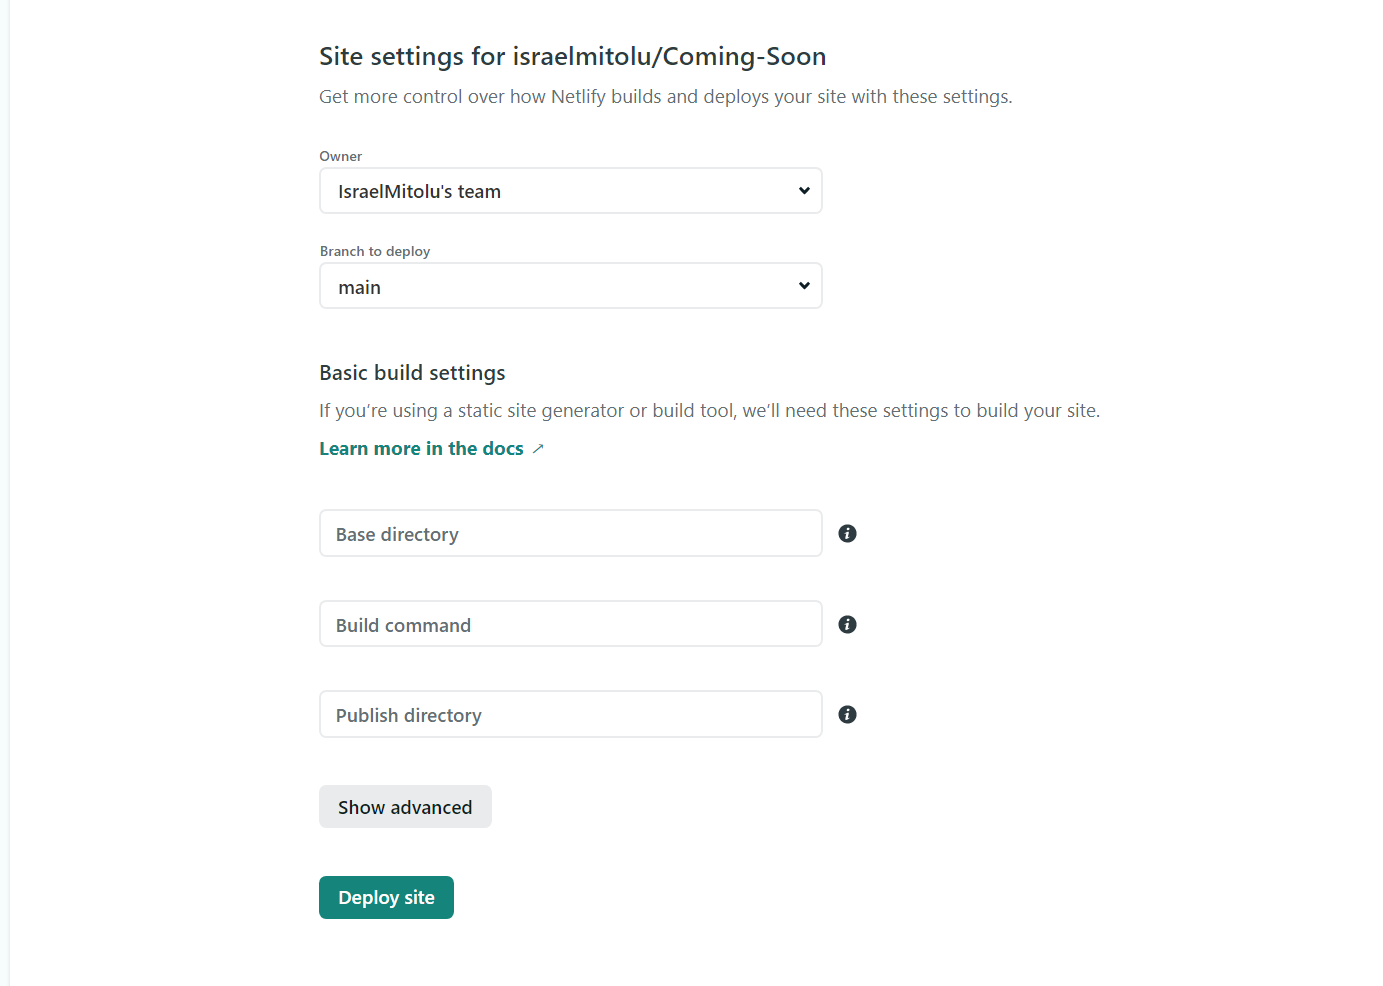 Configure the Build settings